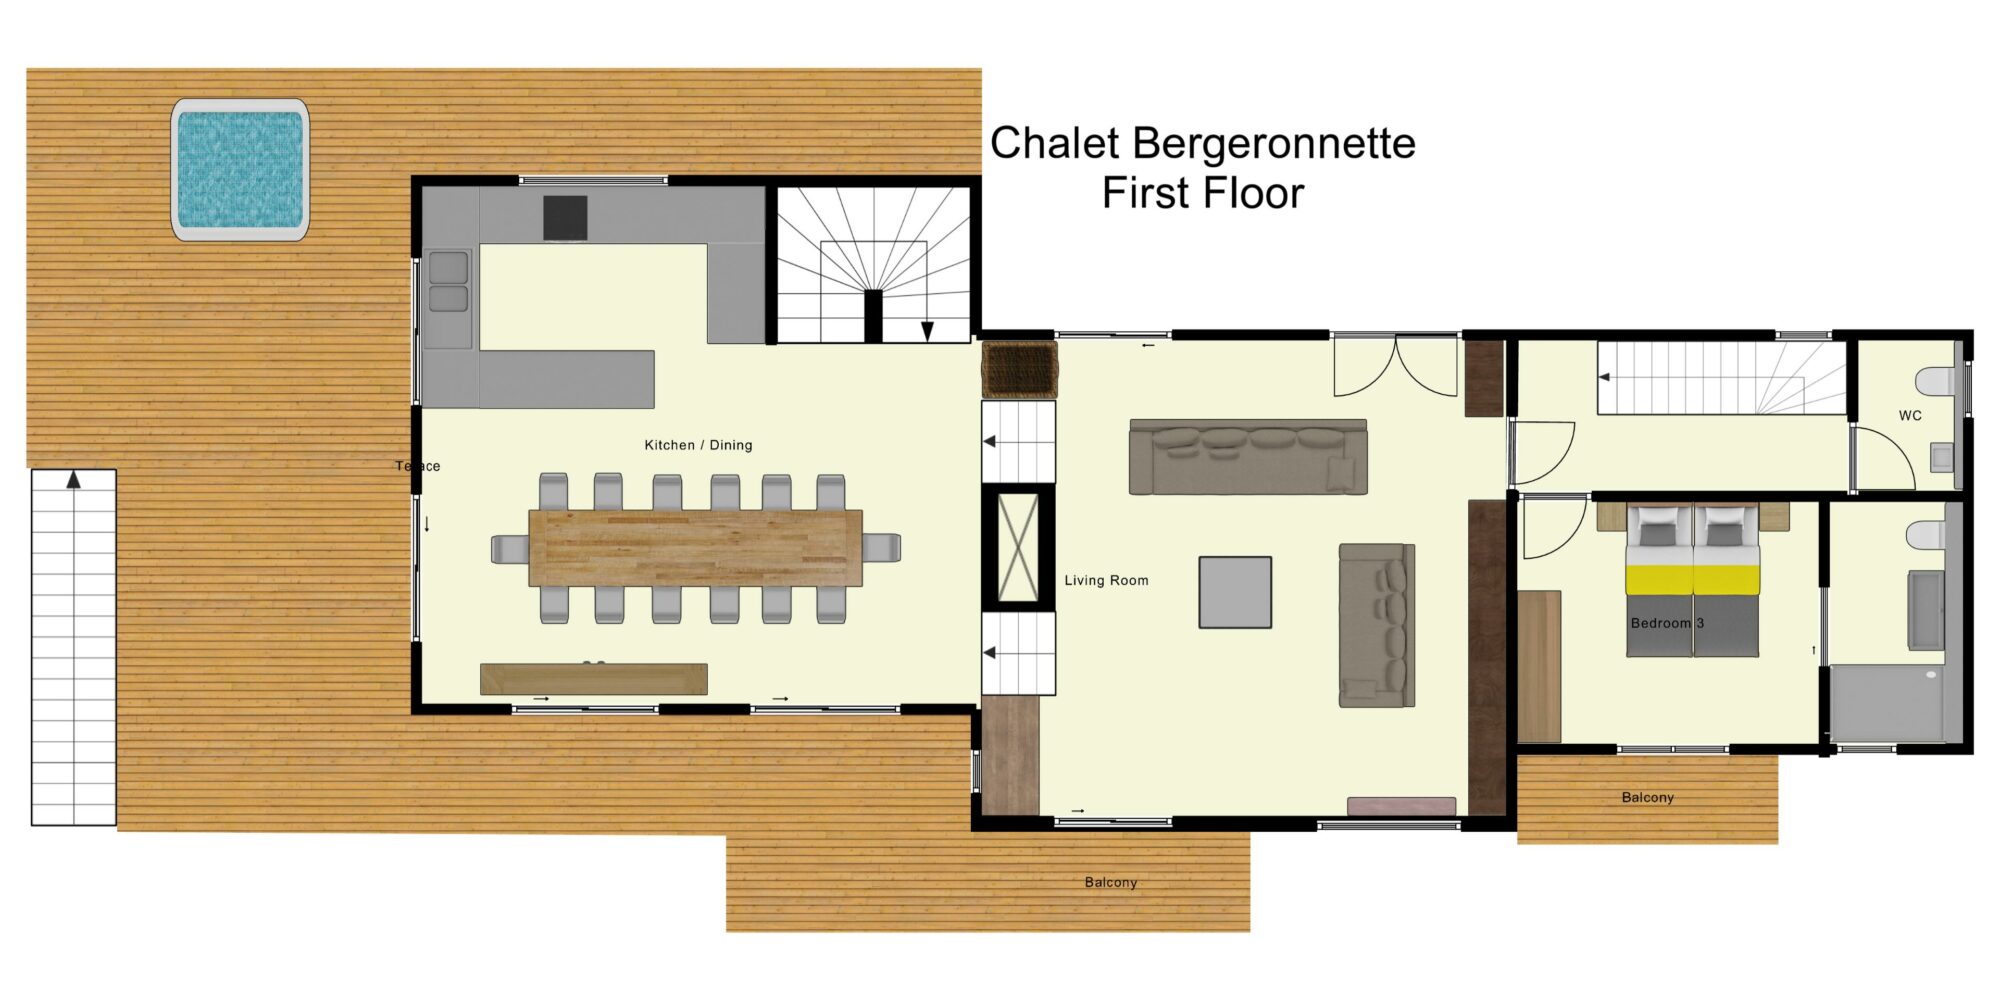 Chalet Bergeronnette Meribel Floor Plan 1